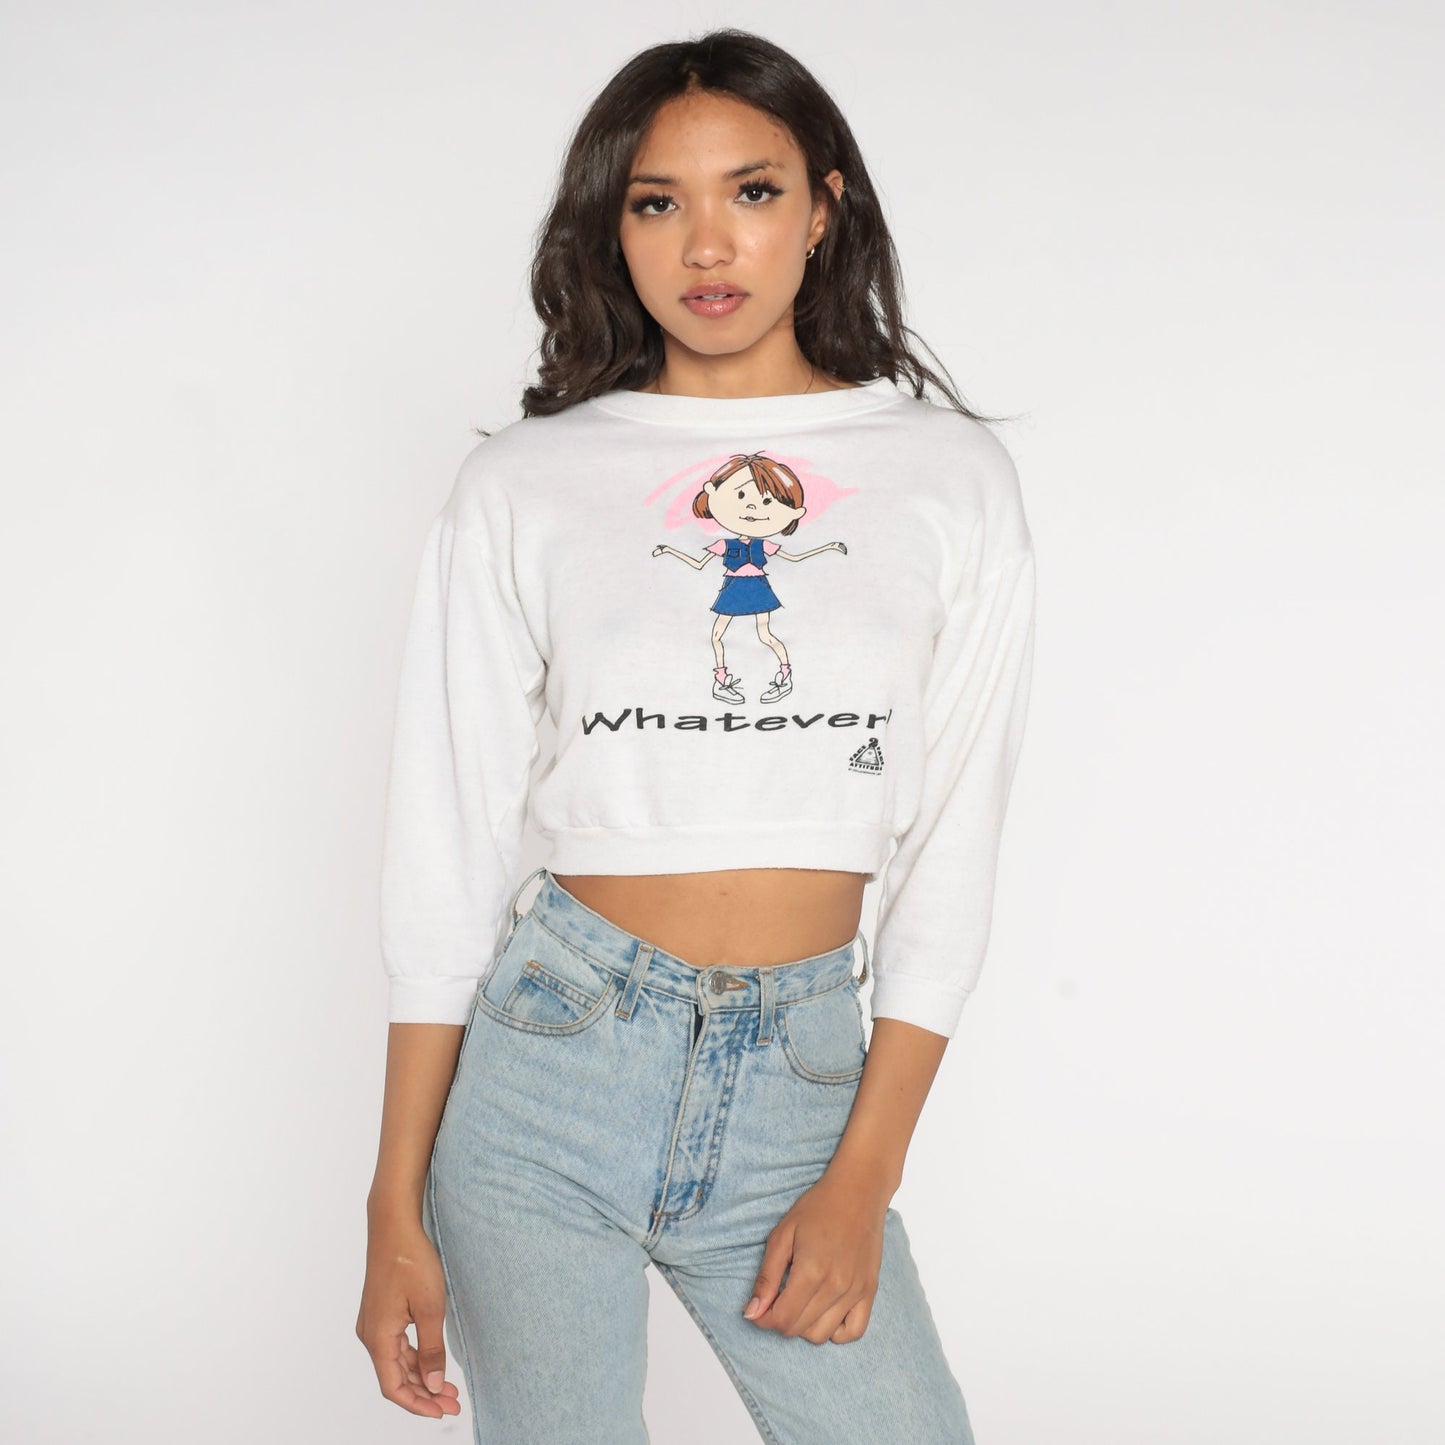 Whatever Sweatshirt 90s Cropped Sweatshirt Sassy Girl Graphic Pullover Sweater Retro Attitude Girly Streetwear White Vintage 1990s Small S